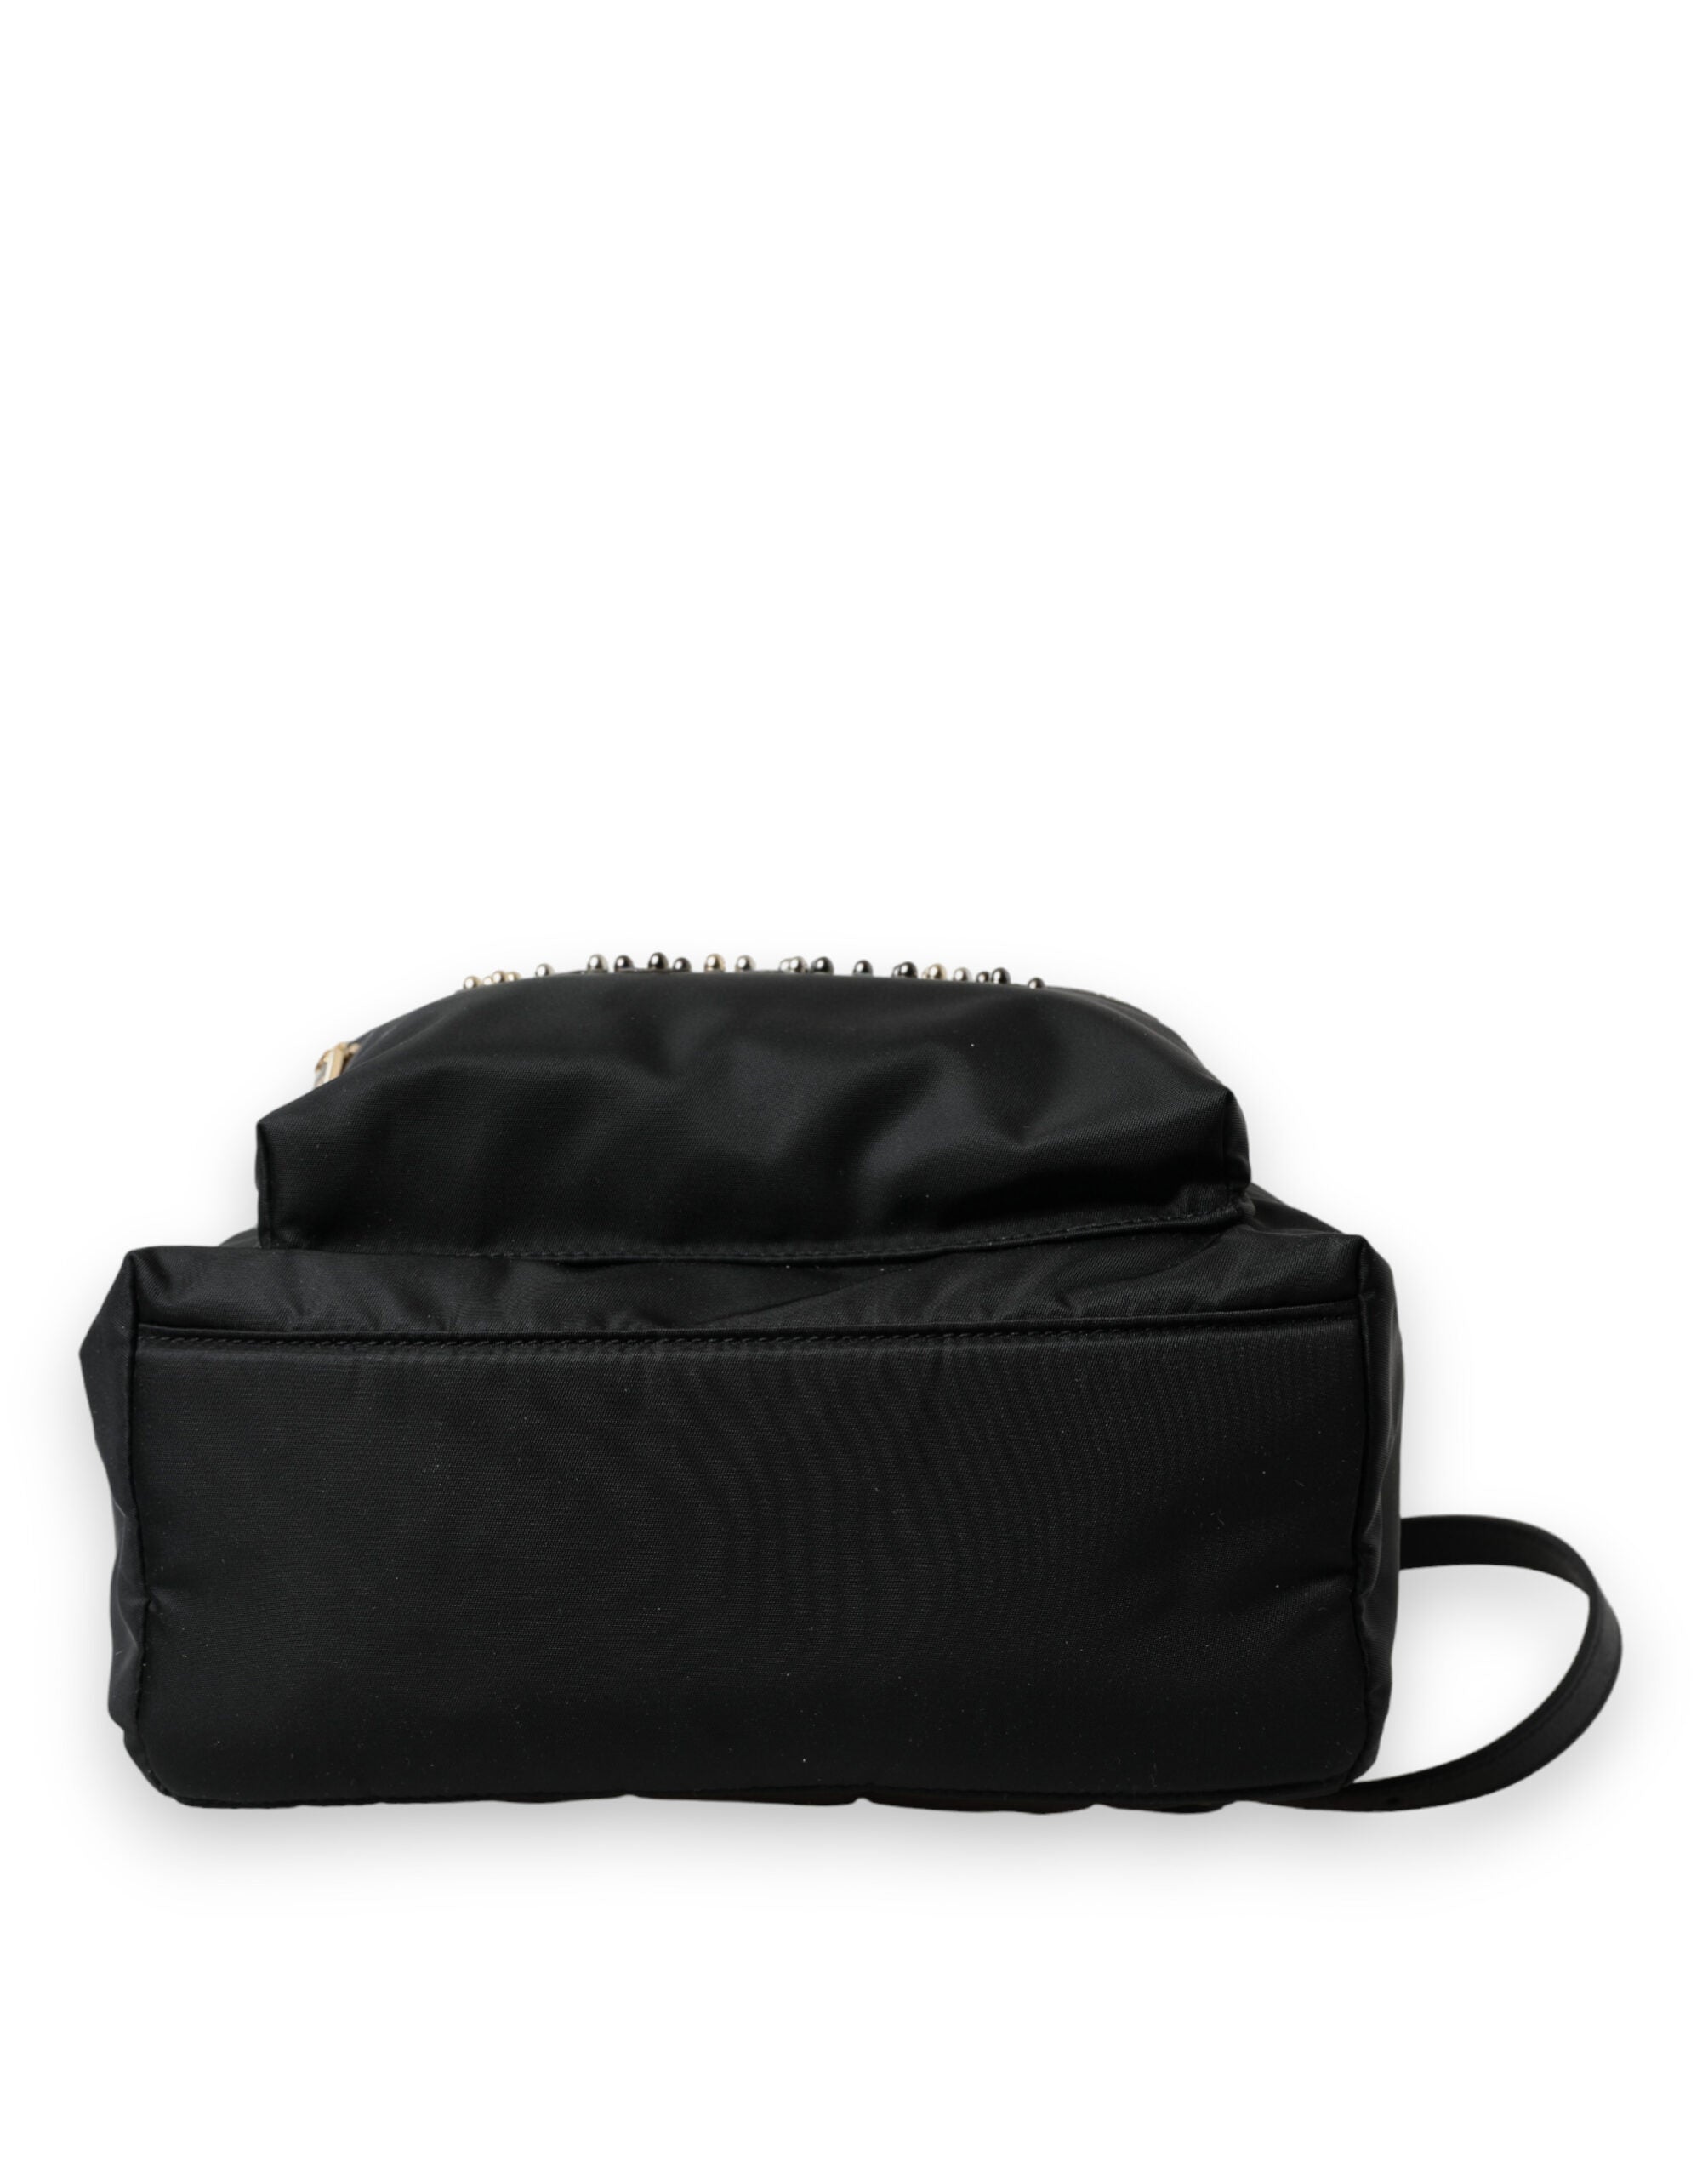 Dolce & Gabbana Black Nylon #DGFamily Backpack VULCANO Bag